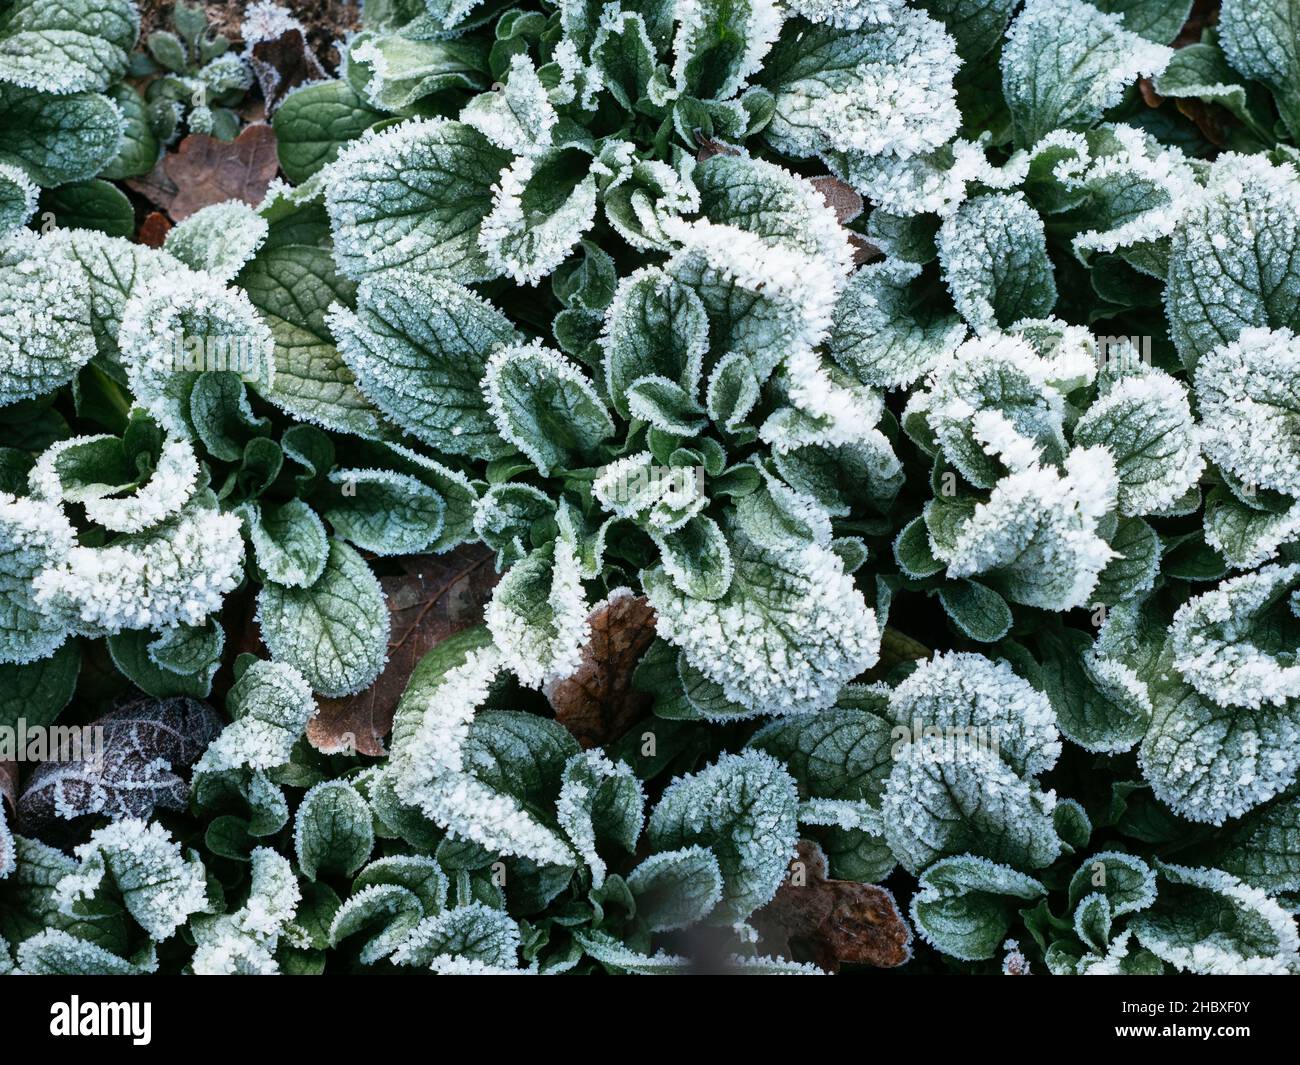 Corn salad (Valerianella locusta) with frost in December. Stock Photo